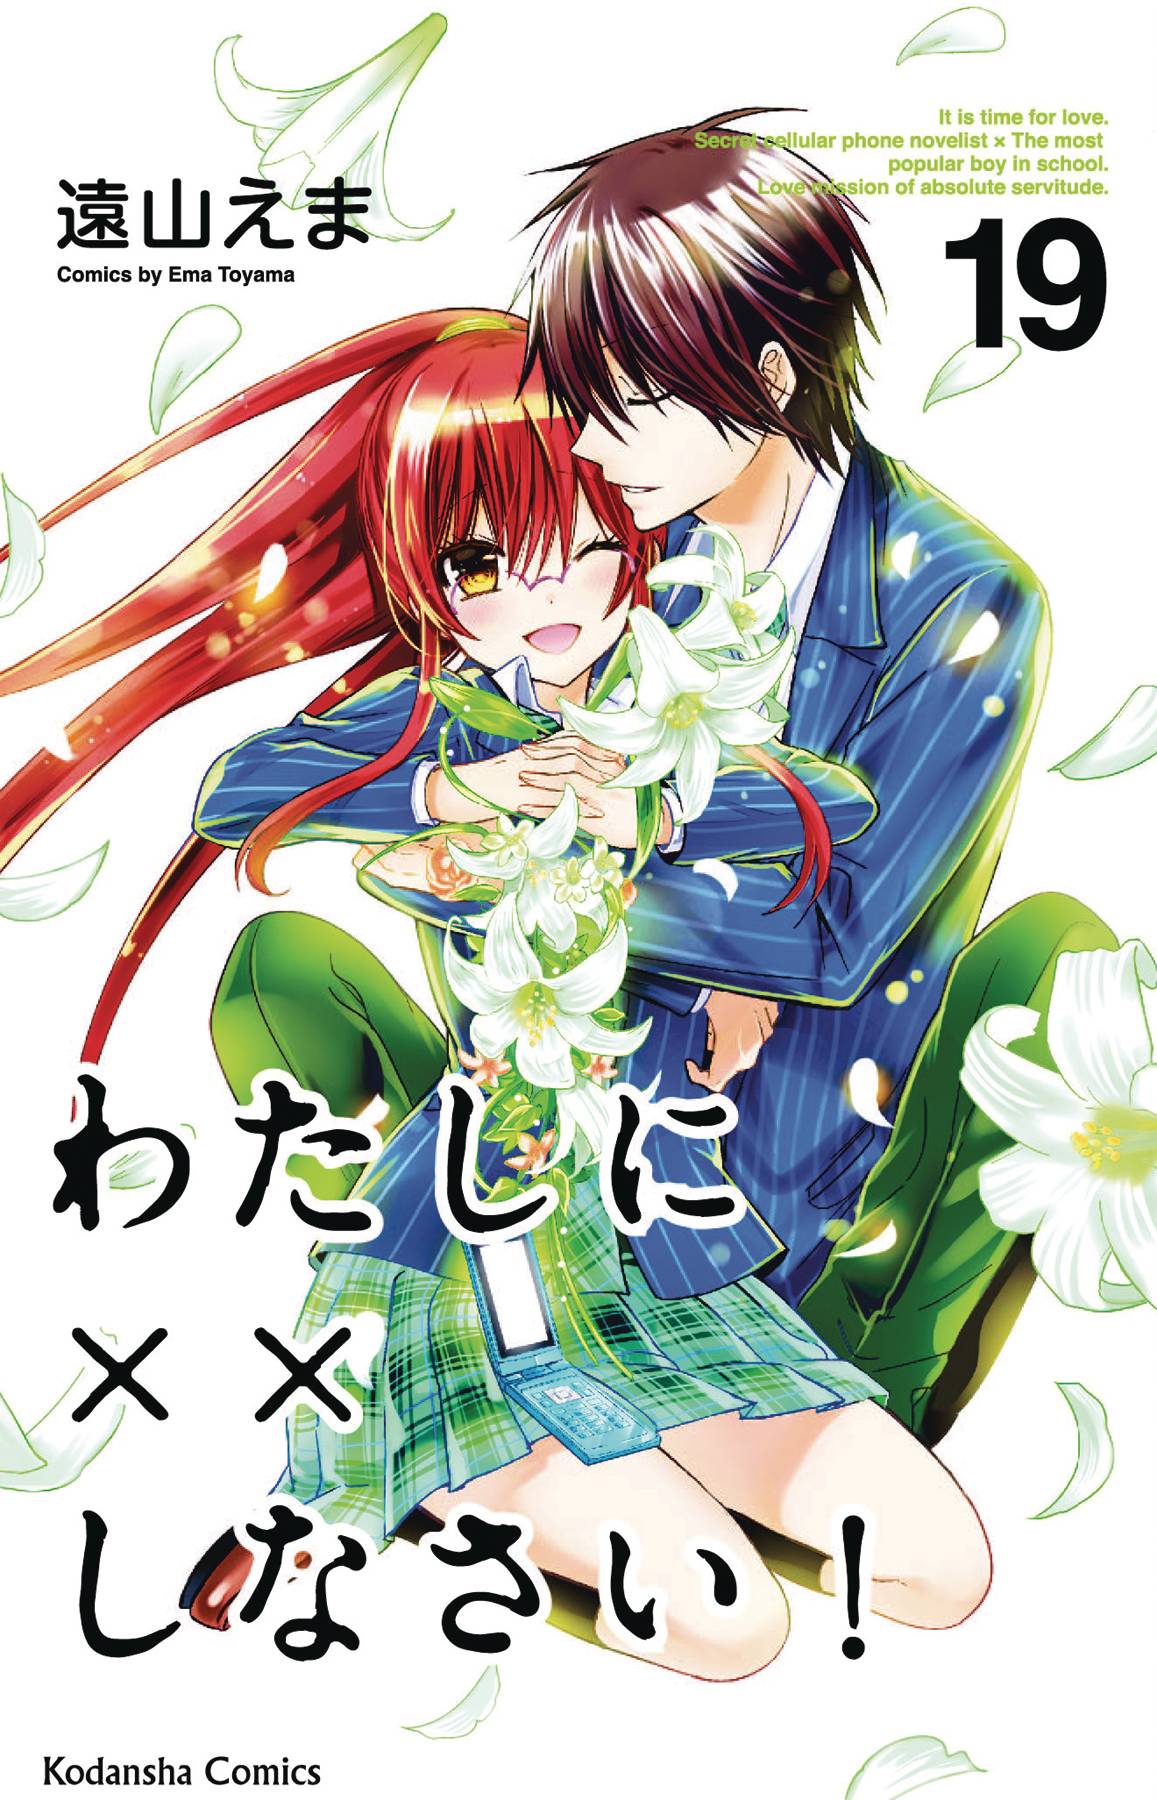 Missions of Love Manga Volume 19